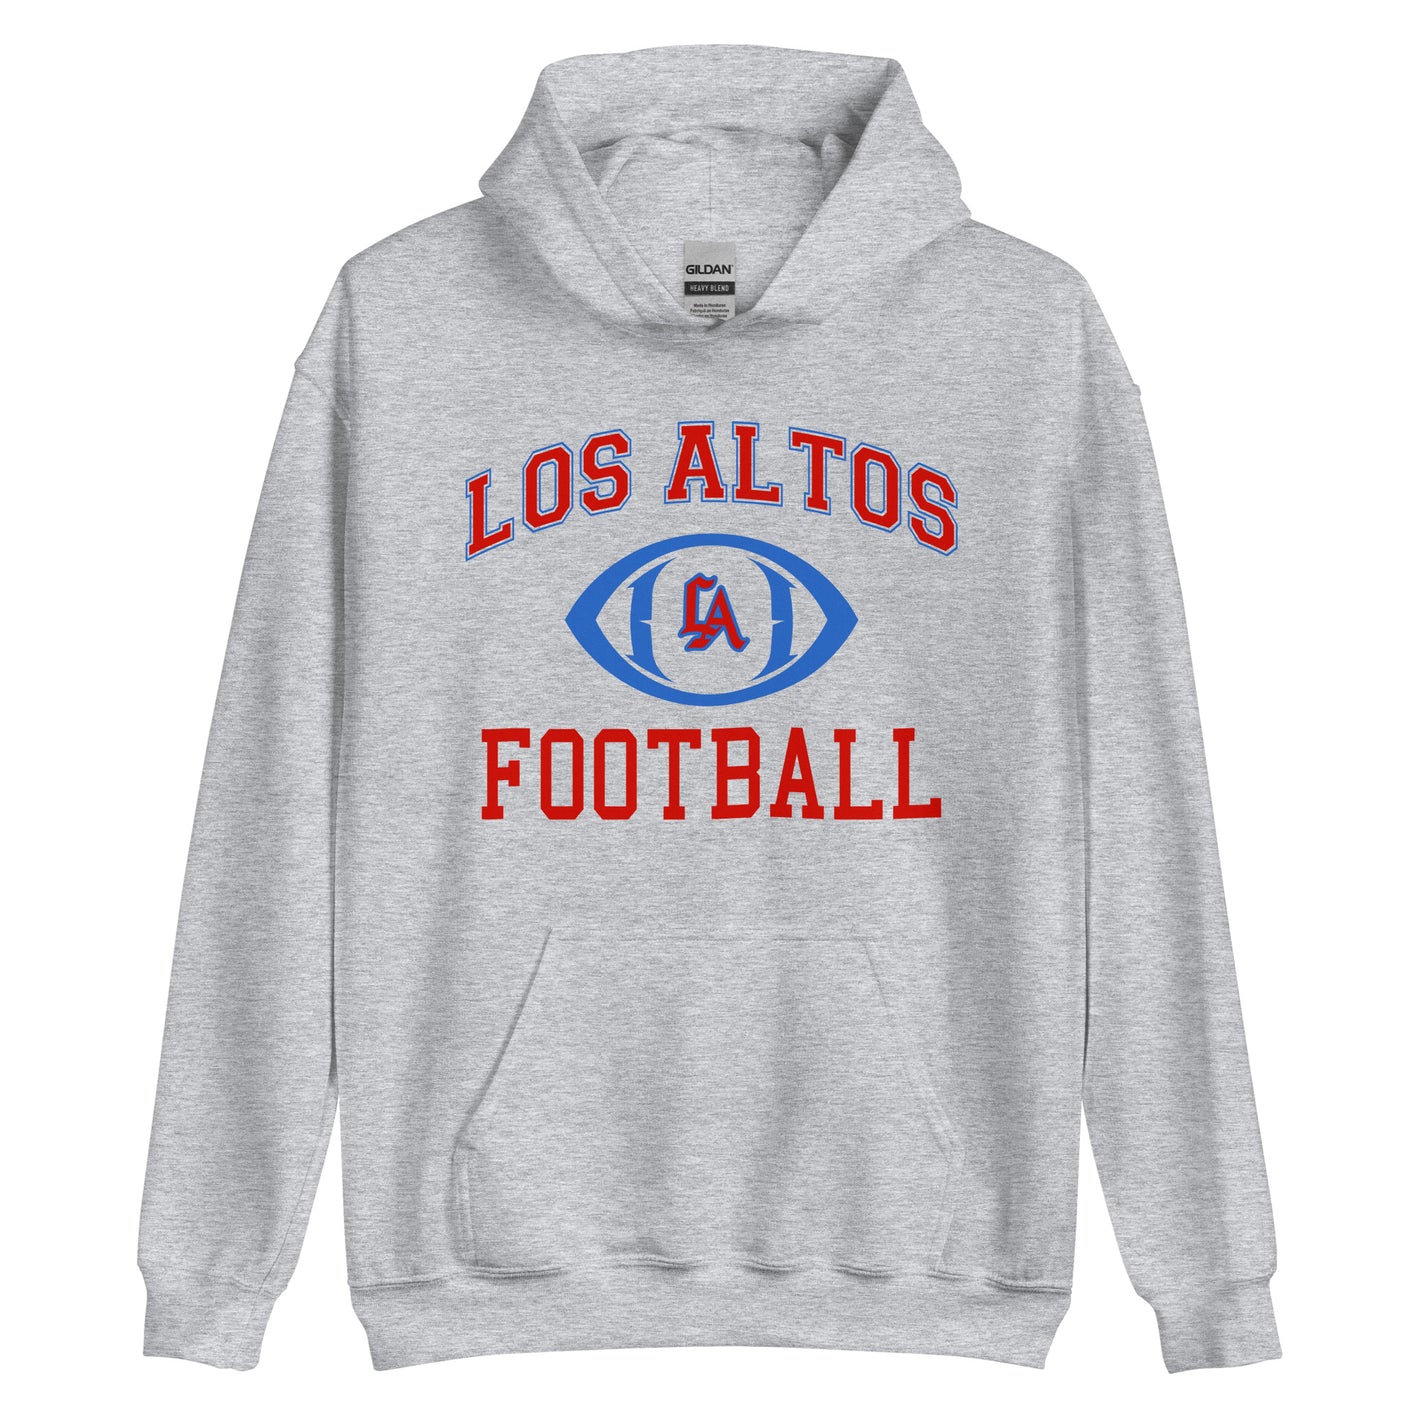 Los Altos Football Unisex Hoodie